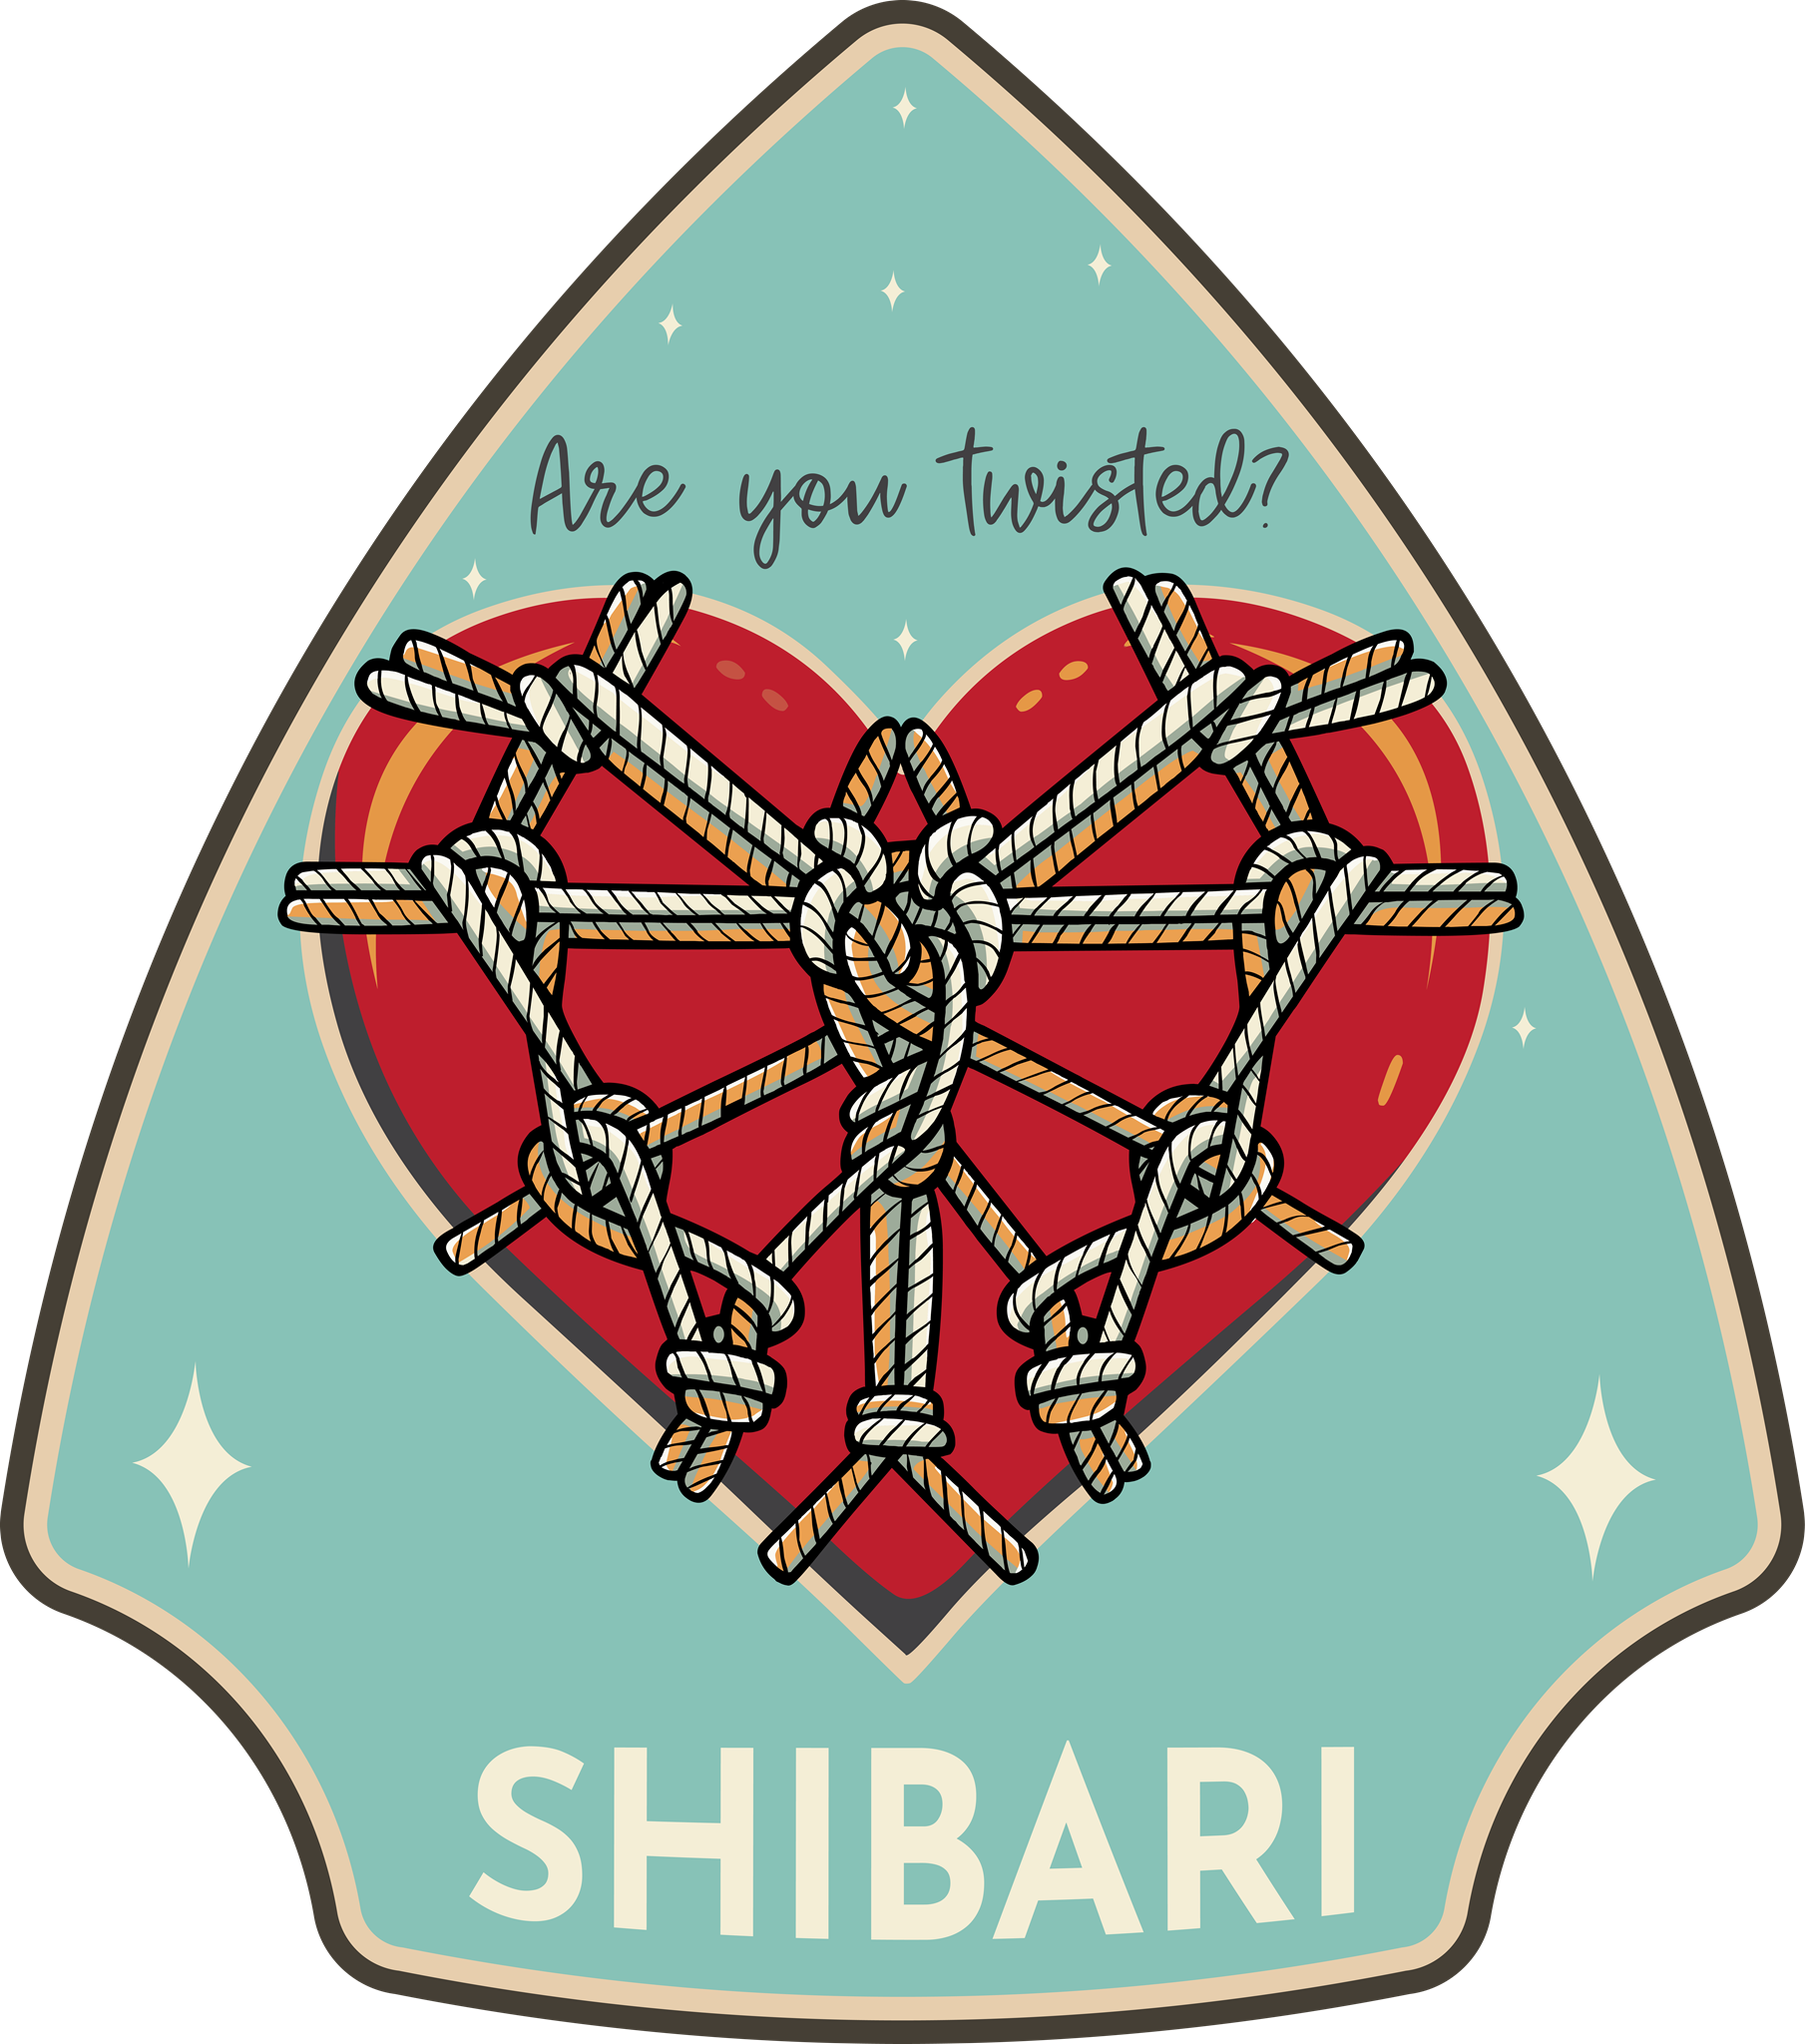 Shibari Kinky Merit Badge Decal Kinkthink Factory 